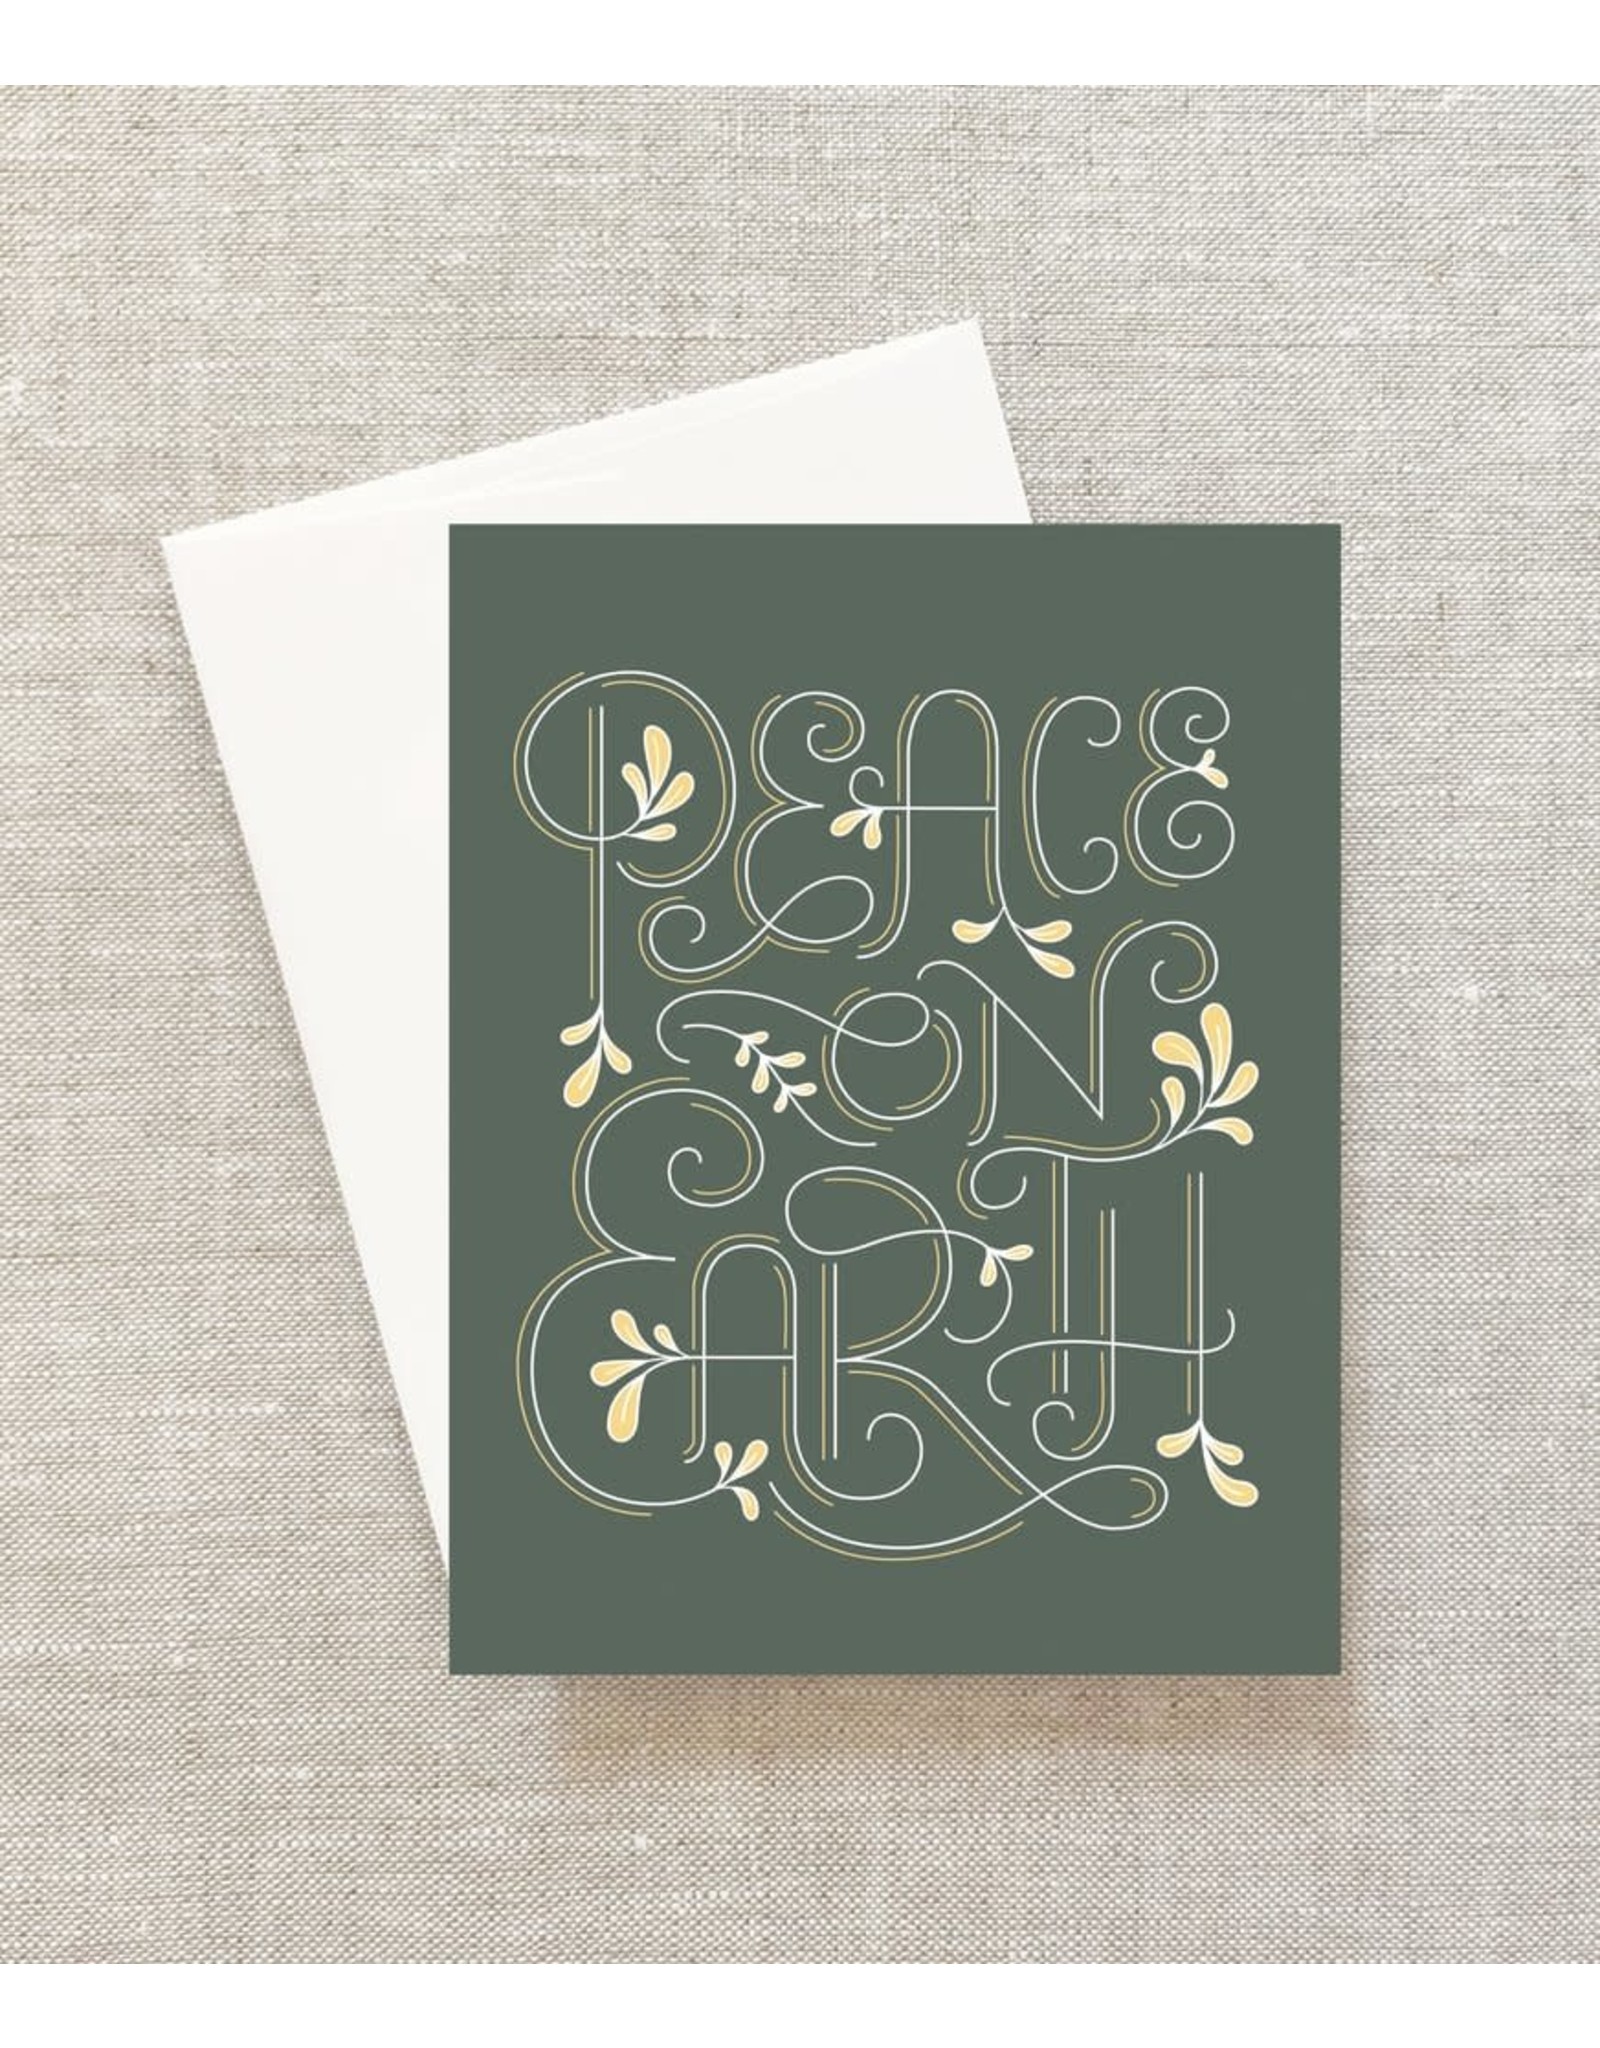 21 co "Peace on Earth" Christmas Greeting Card